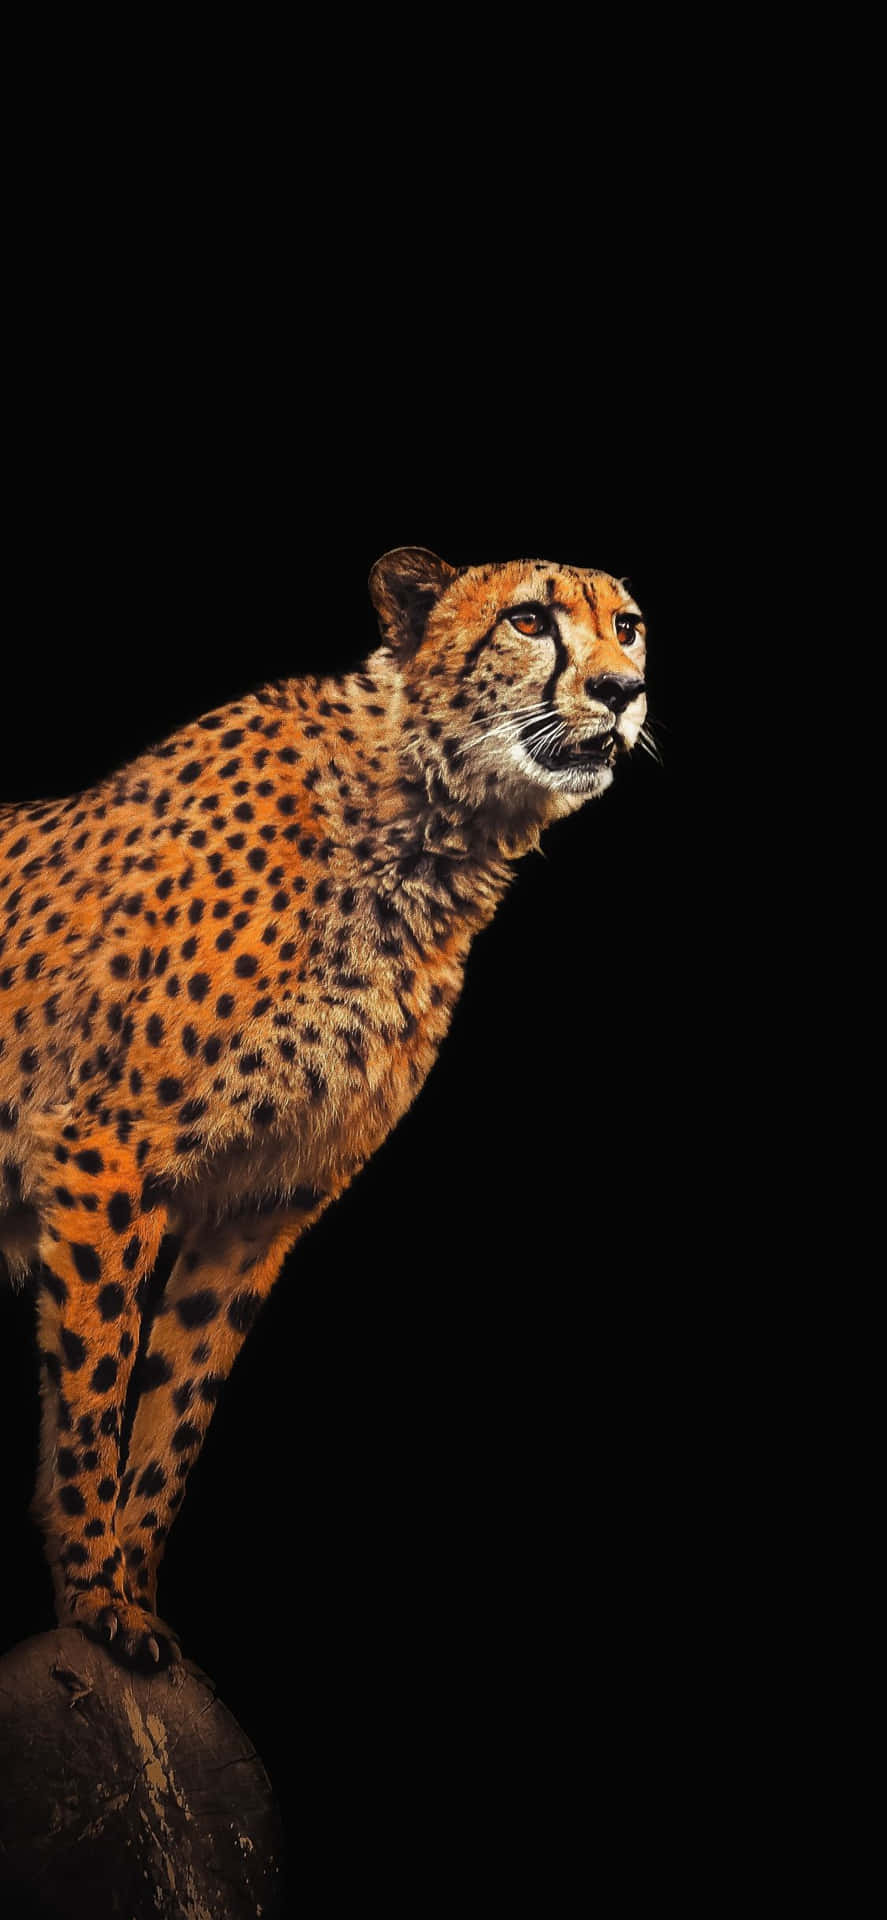 Cheetah with wings HD wallpaper  Cheetah wallpaper, Jaguar wallpaper,  Animal wallpaper